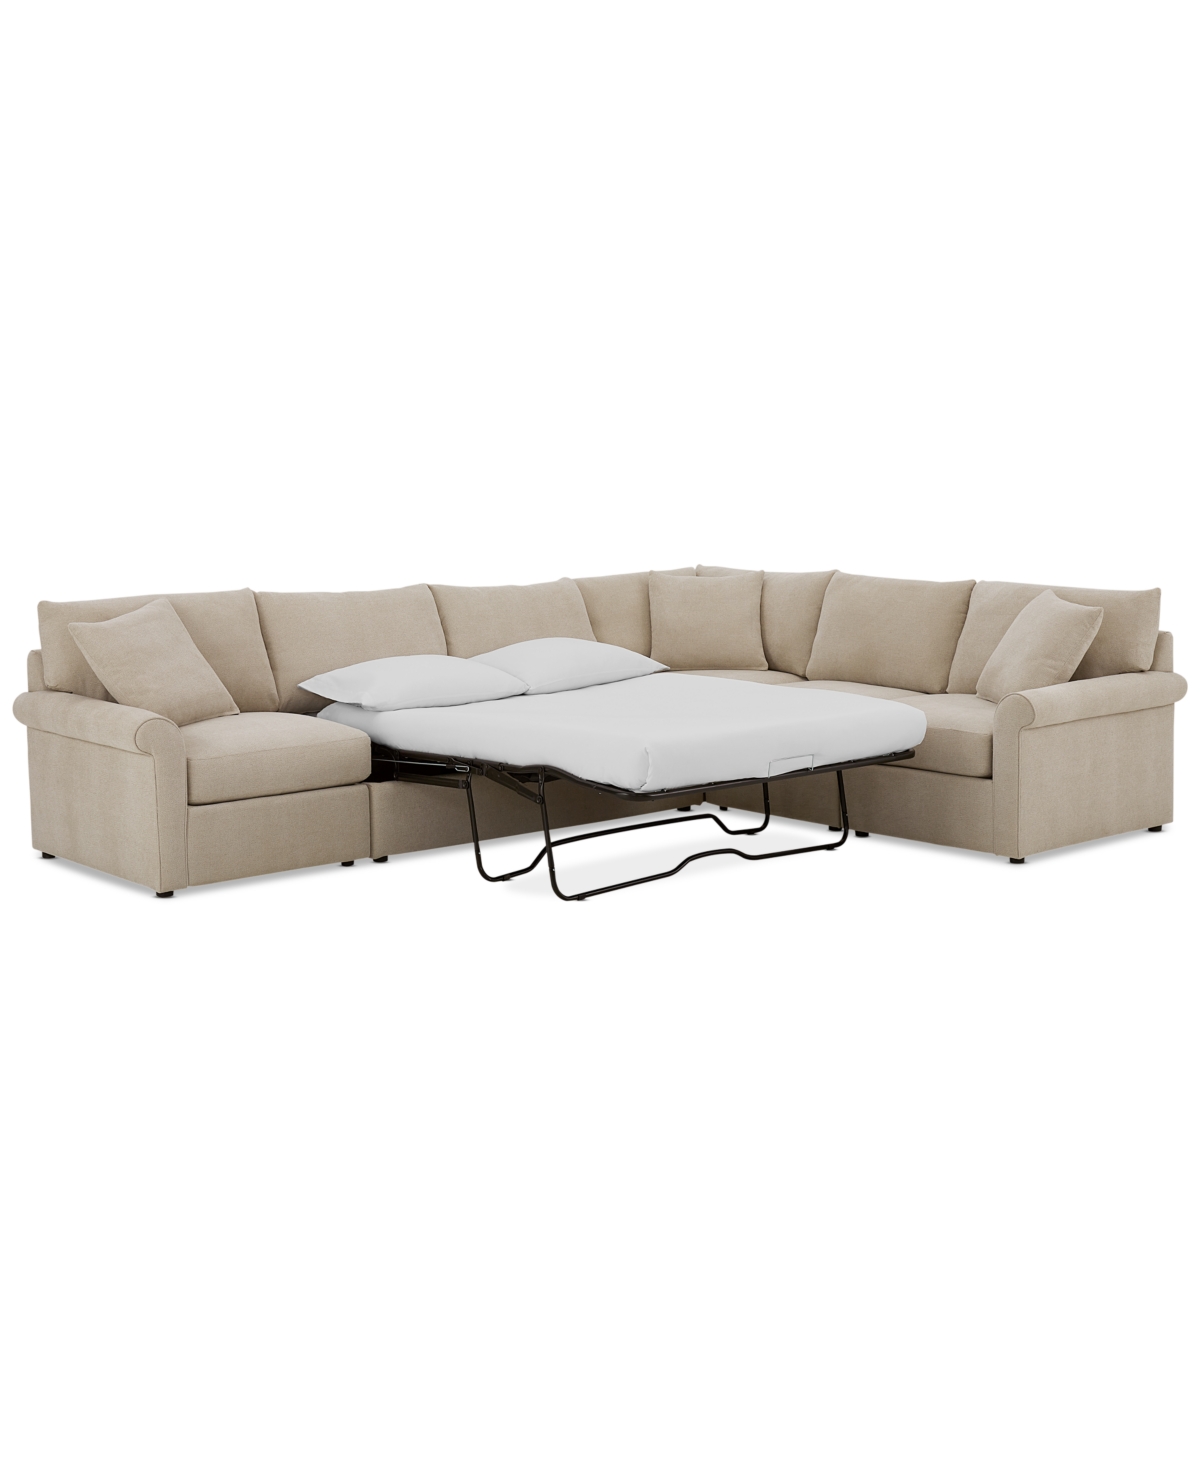 Furniture Wrenley 137" 5-pc. Fabric L-shape Modular Sleeper Sectional Sofa, Created For Macy's In Dove